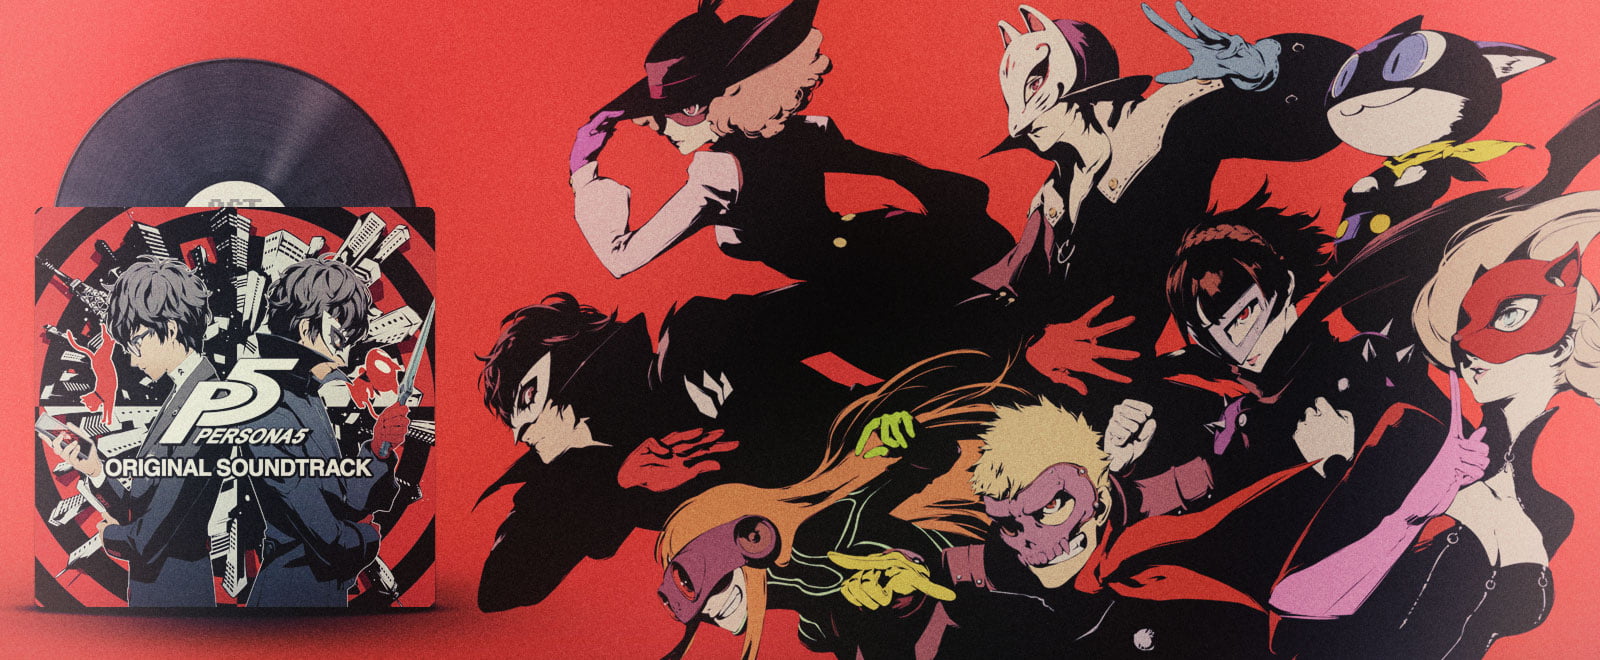 Persona 5 OST Full Complete Soundtrack